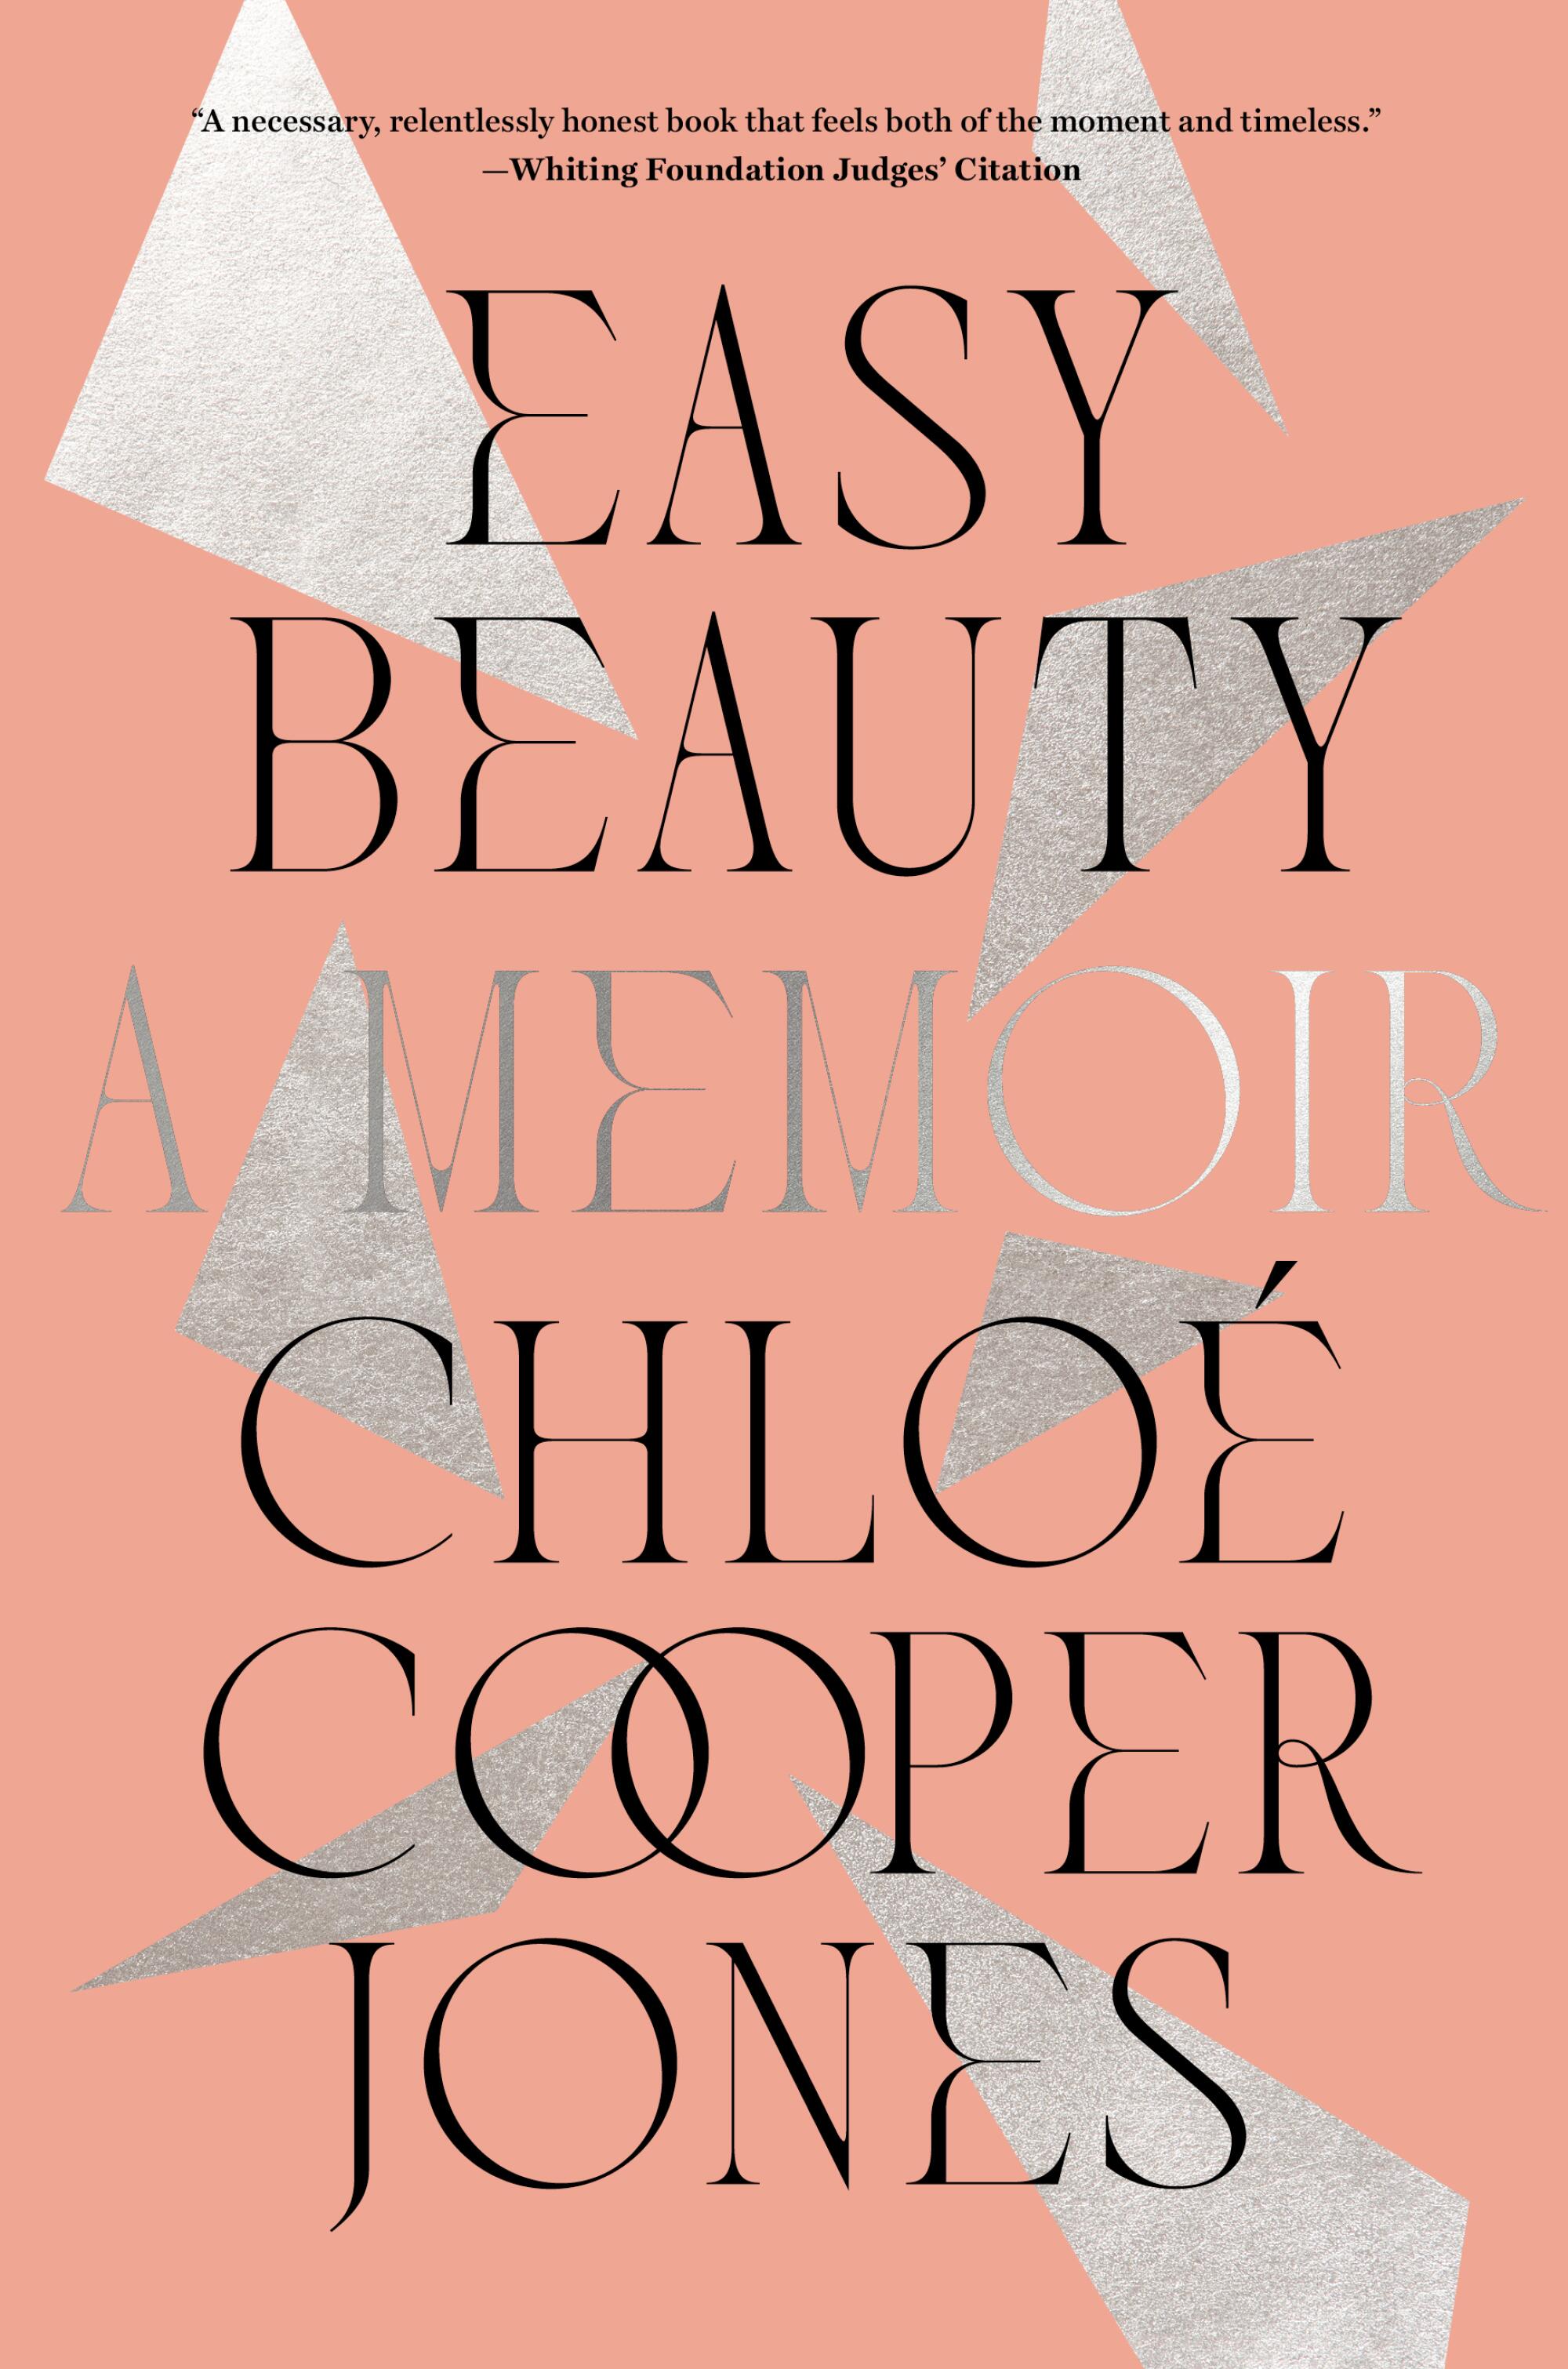 "Easy Beauty: A Memoir" by Chloé Cooper-Jones